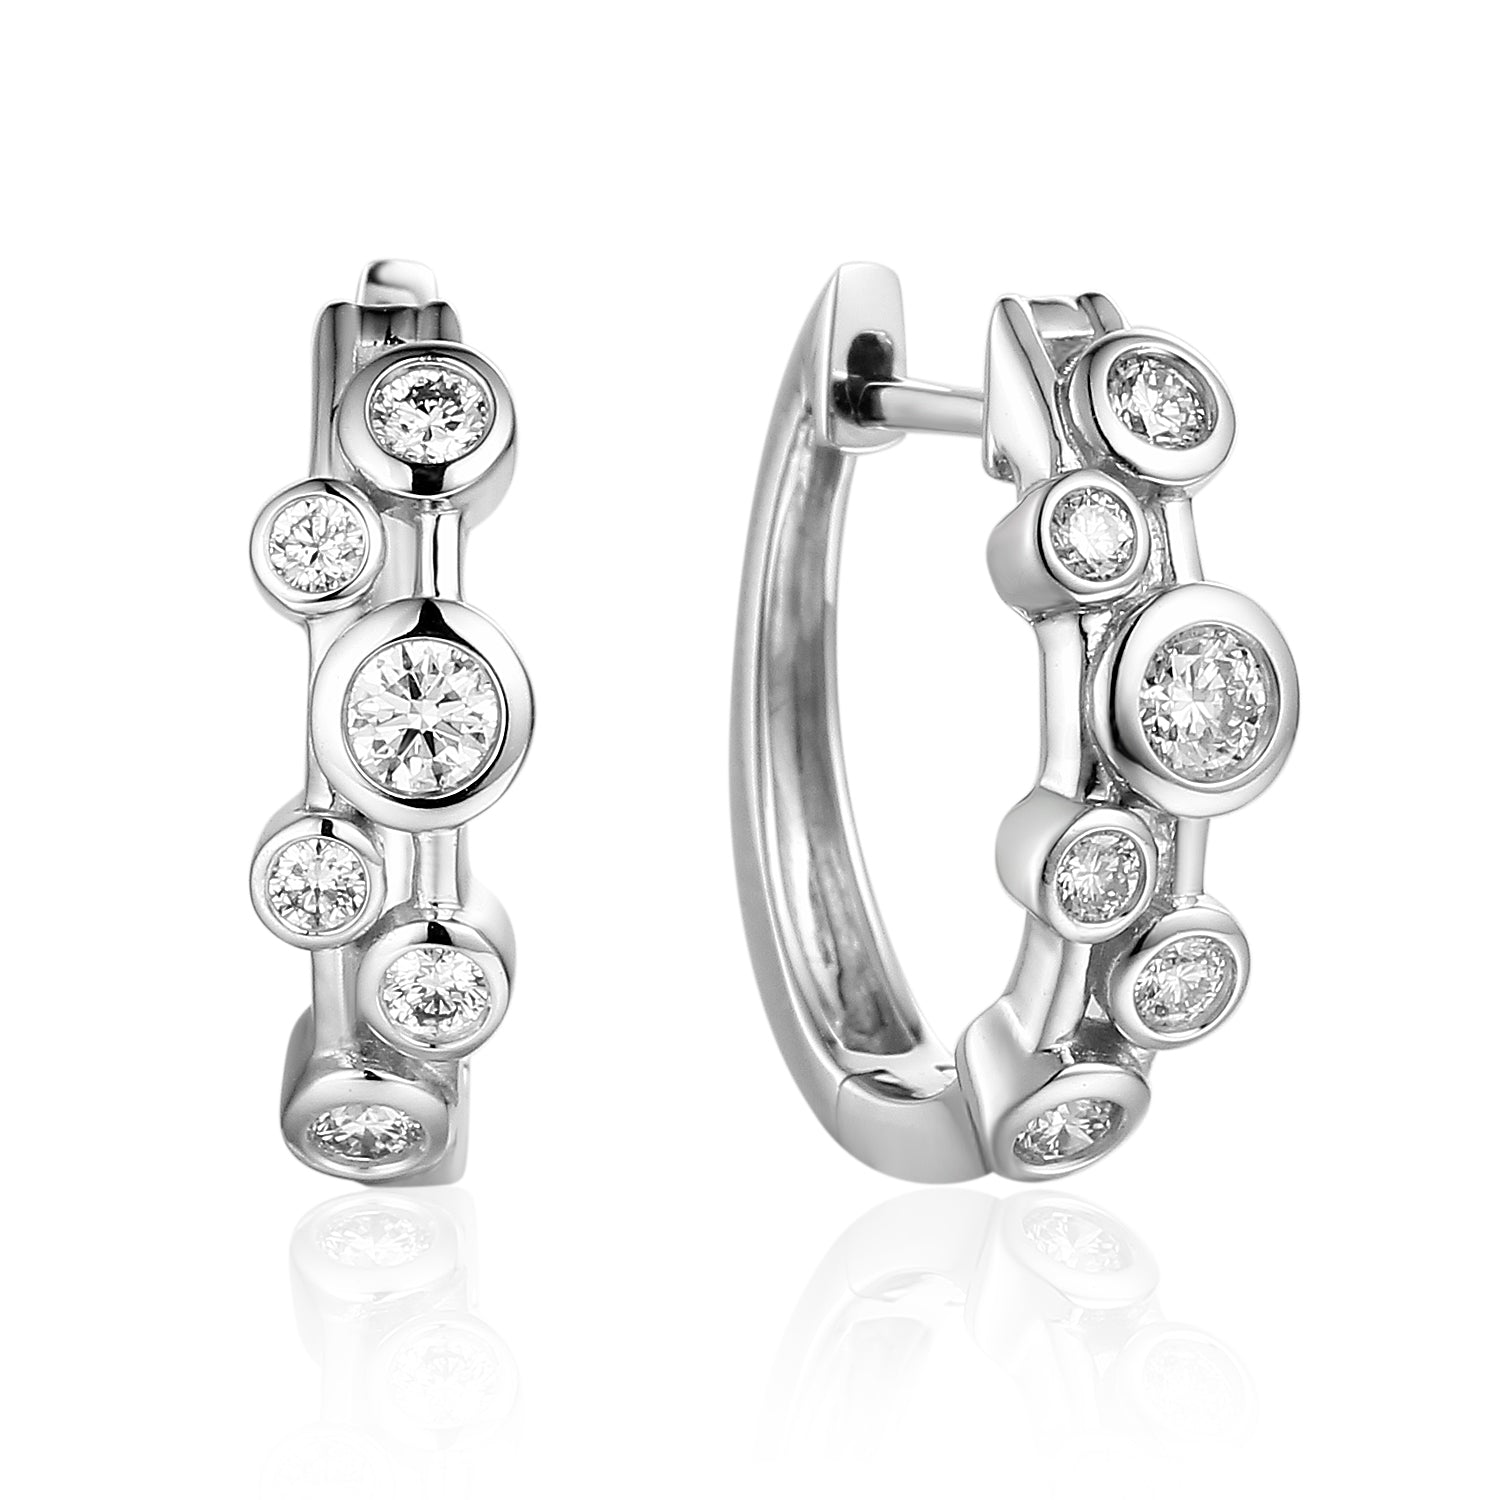 Raindrop design round brilliant diamond hooped earrings rub over setting white gold Harrogate jewellers Fogal and barnes 